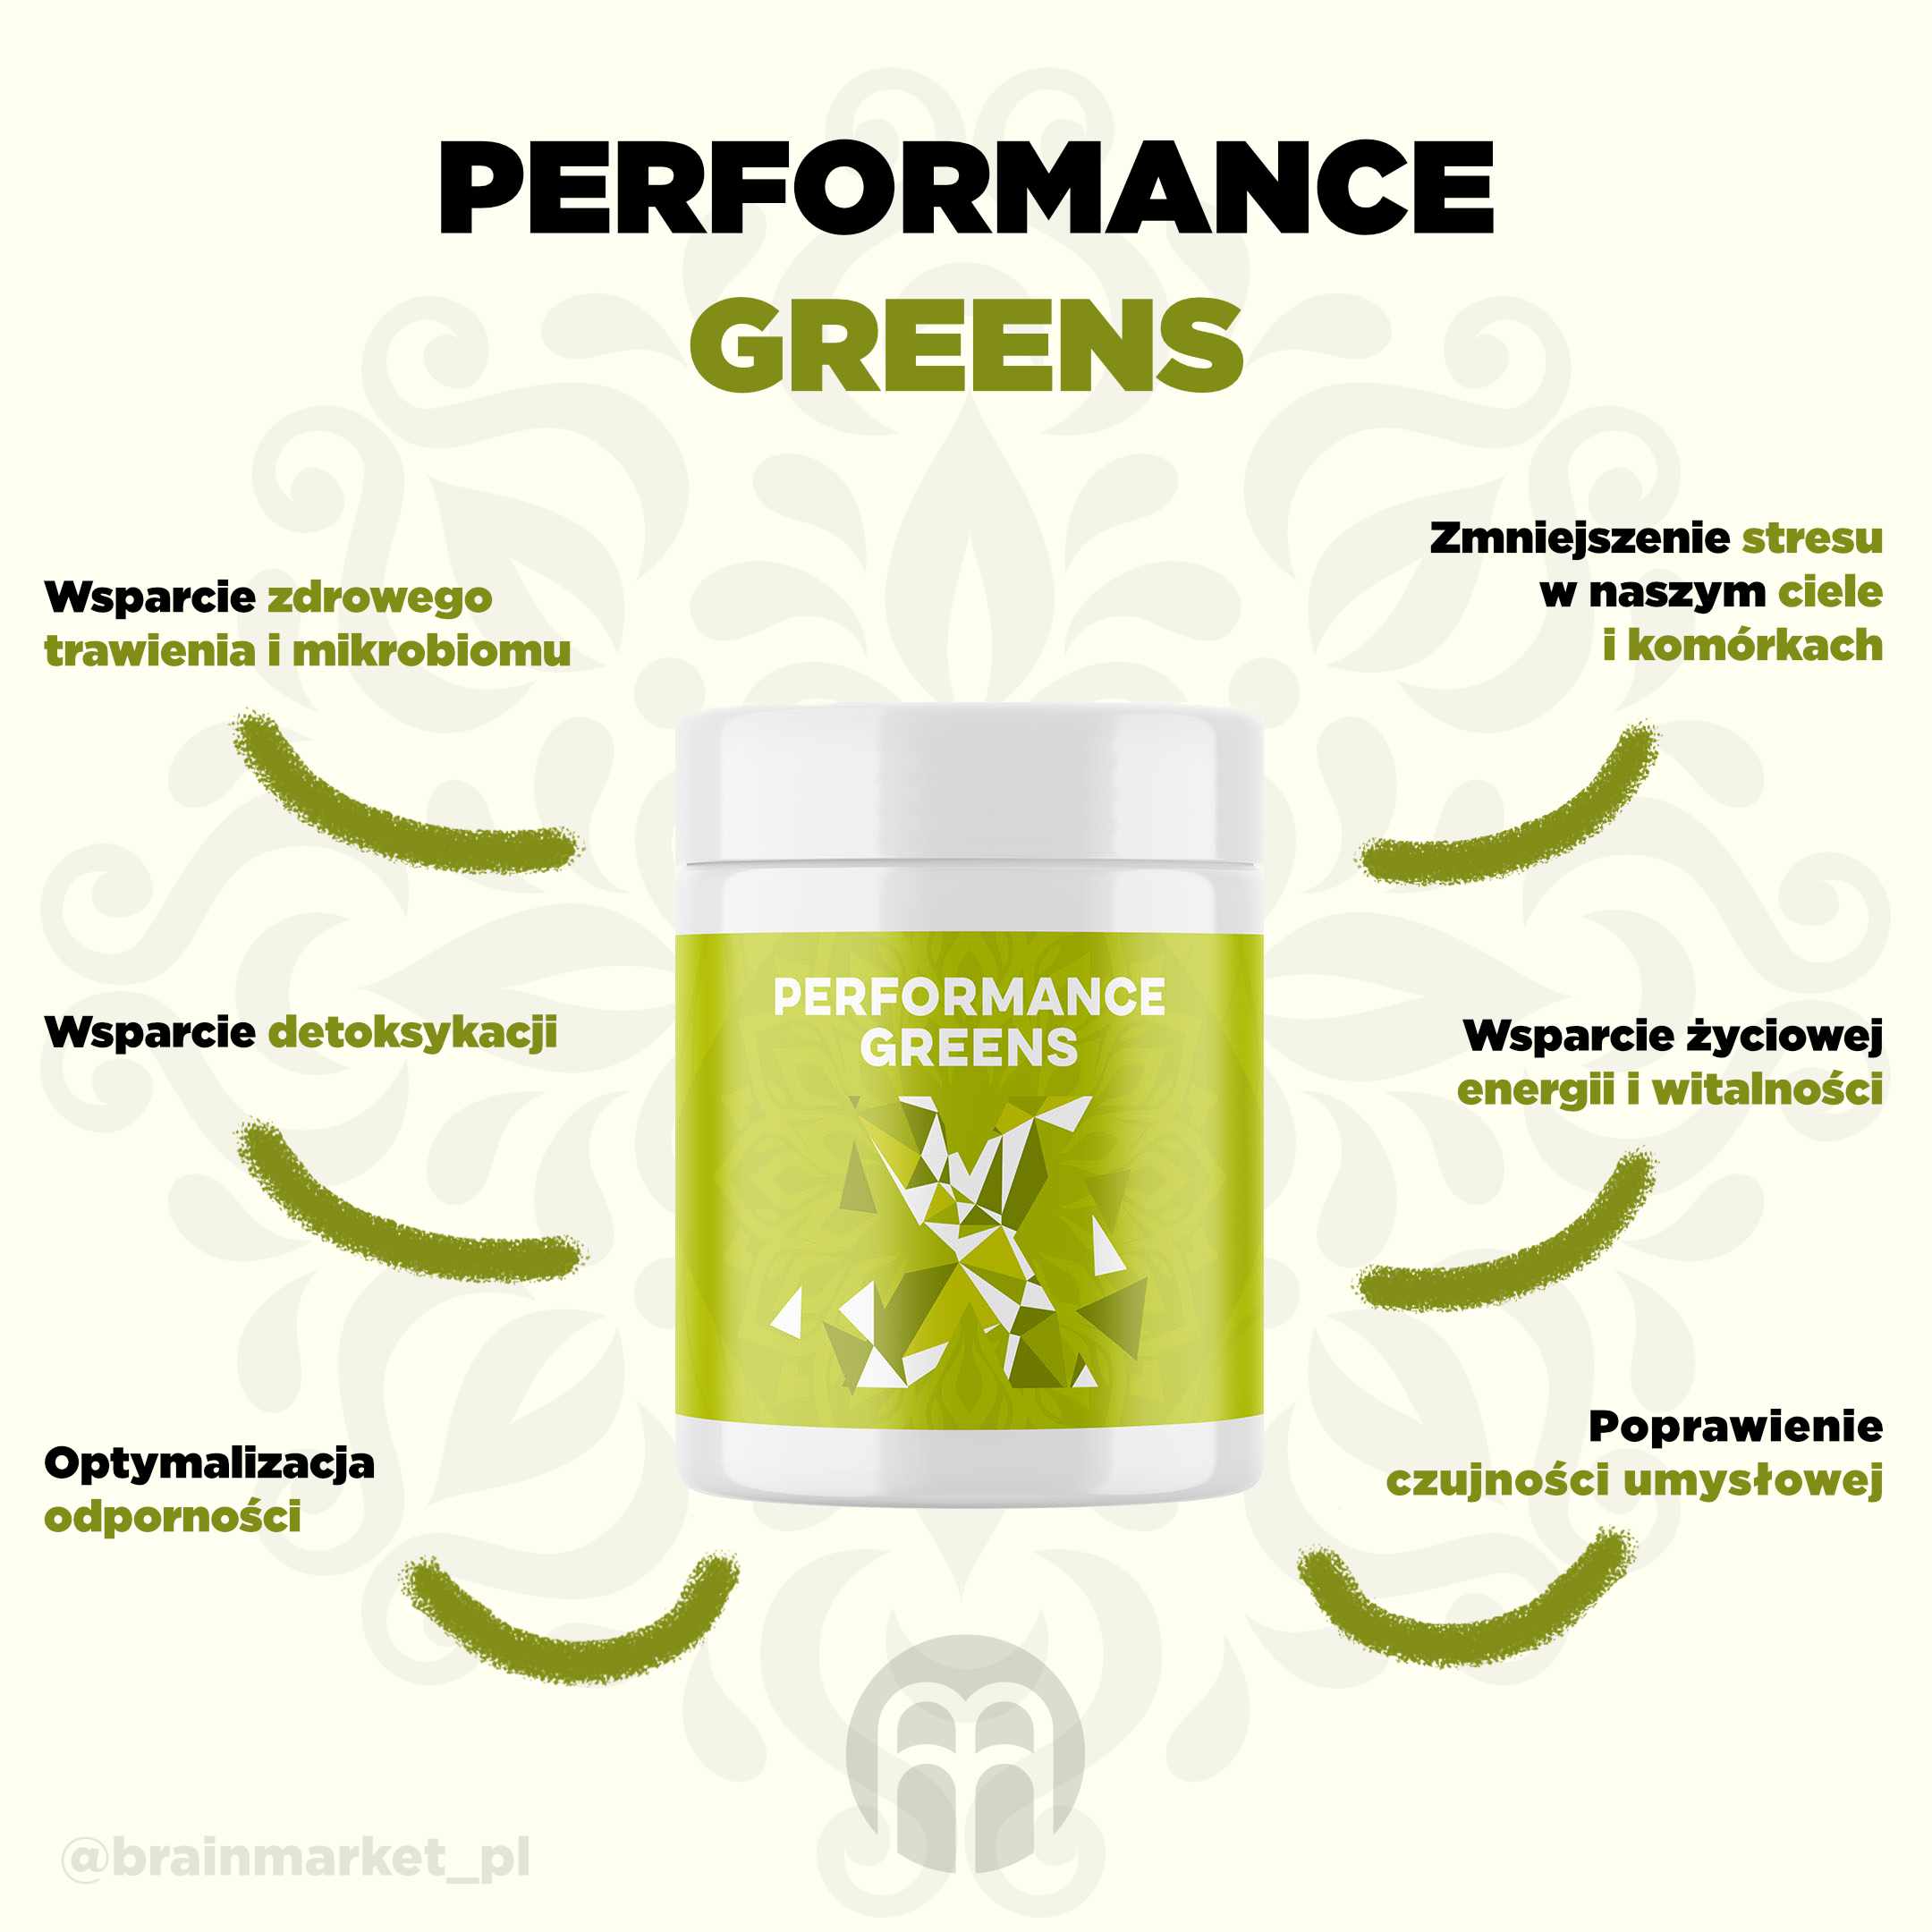 Performance Greens - skuteczna detoksykacja organizmu